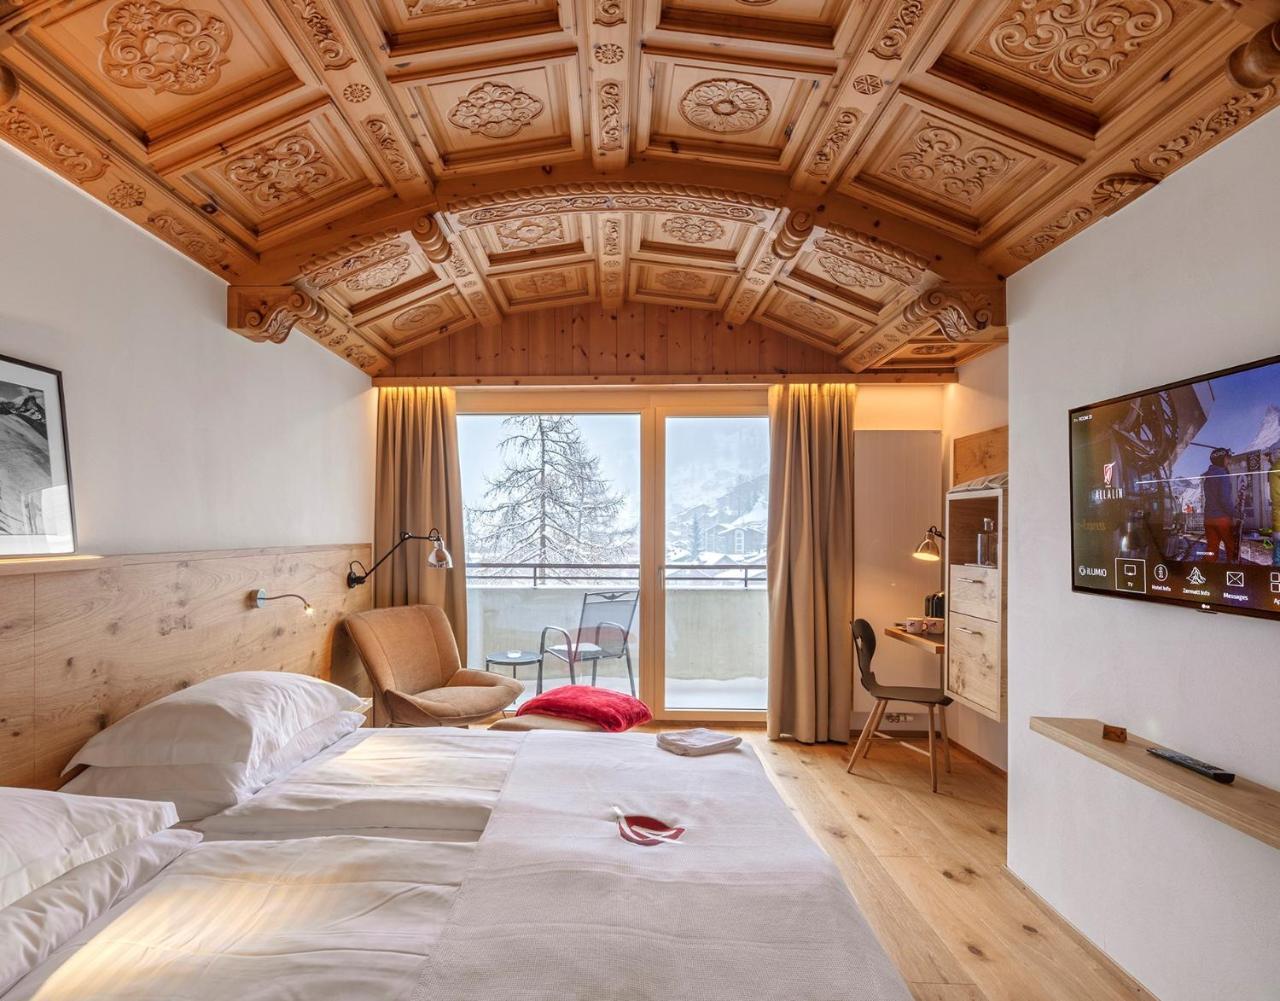 Swiss Alpine Hotel Allalin Zermatt Esterno foto